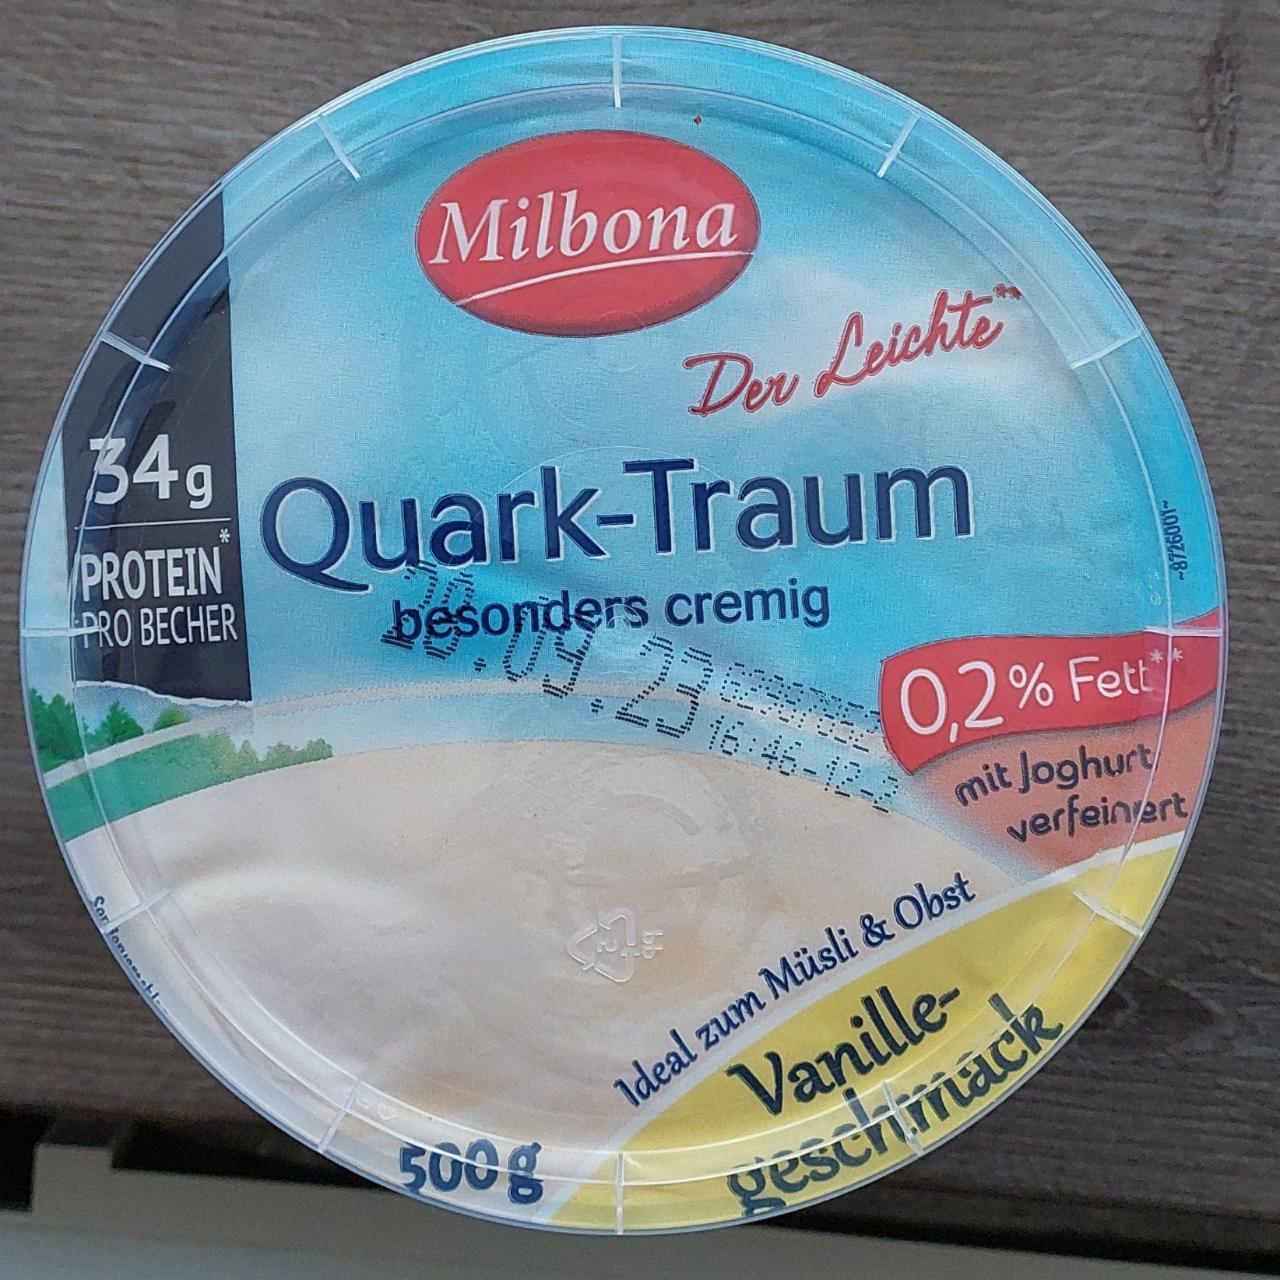 Fotografie - Quark-Traum 0,2% Fett Vanille Milbona